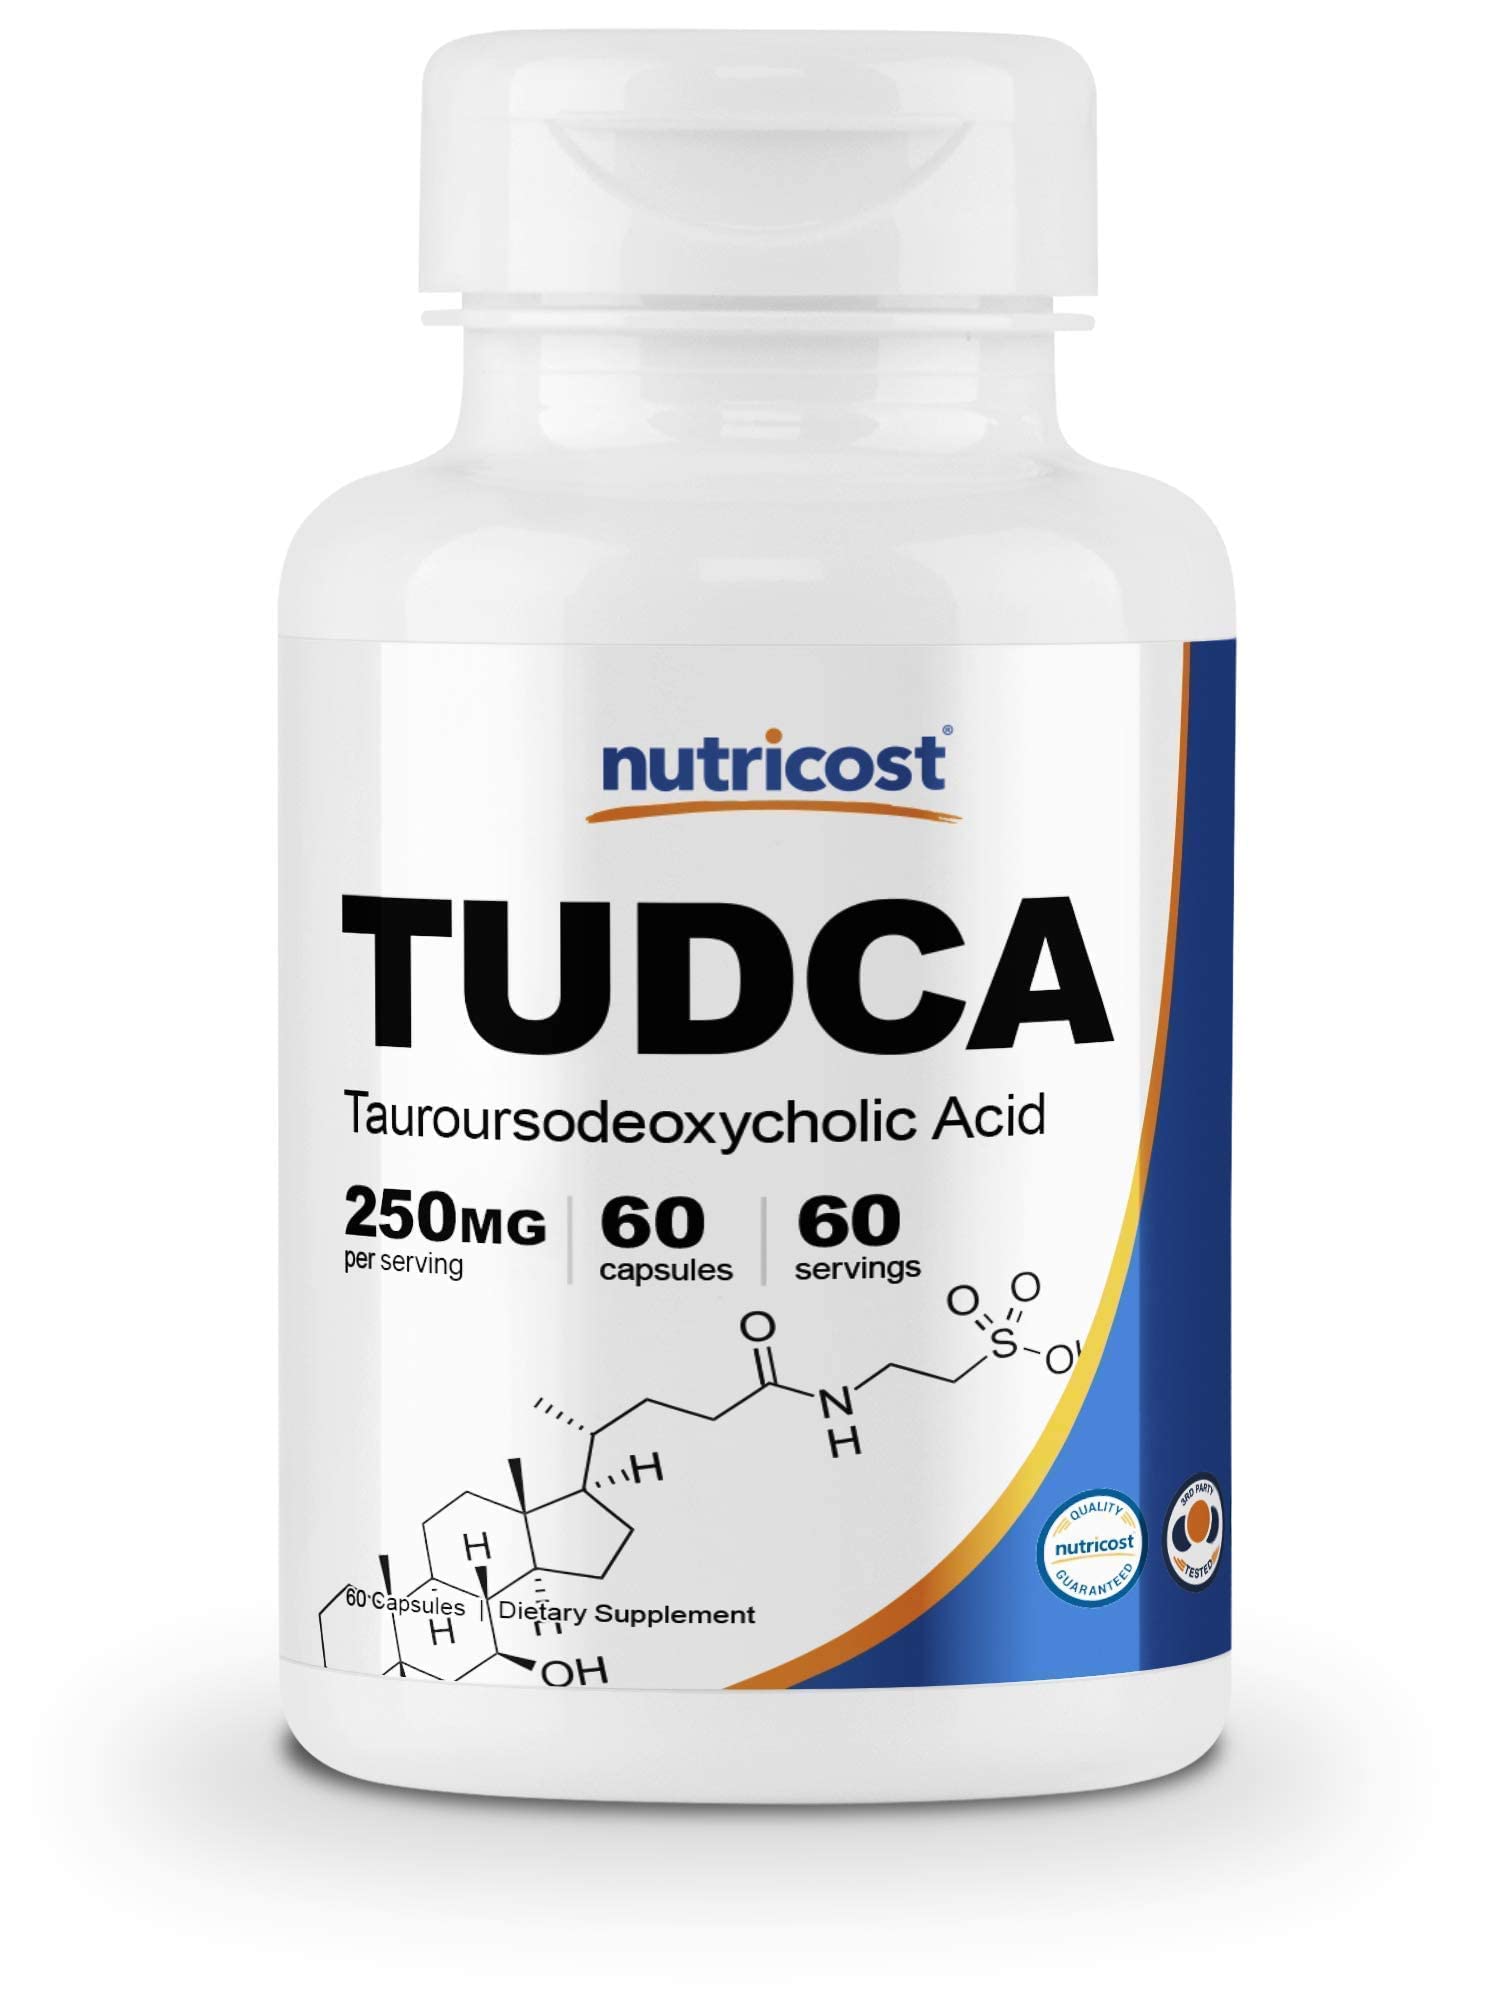 Nutricost Alpha Lipoic Acid 600mg, 240 Caps & Tudca 250mg, 60 Caps & Acetyl L-Carnitine 500mg, 180 Caps